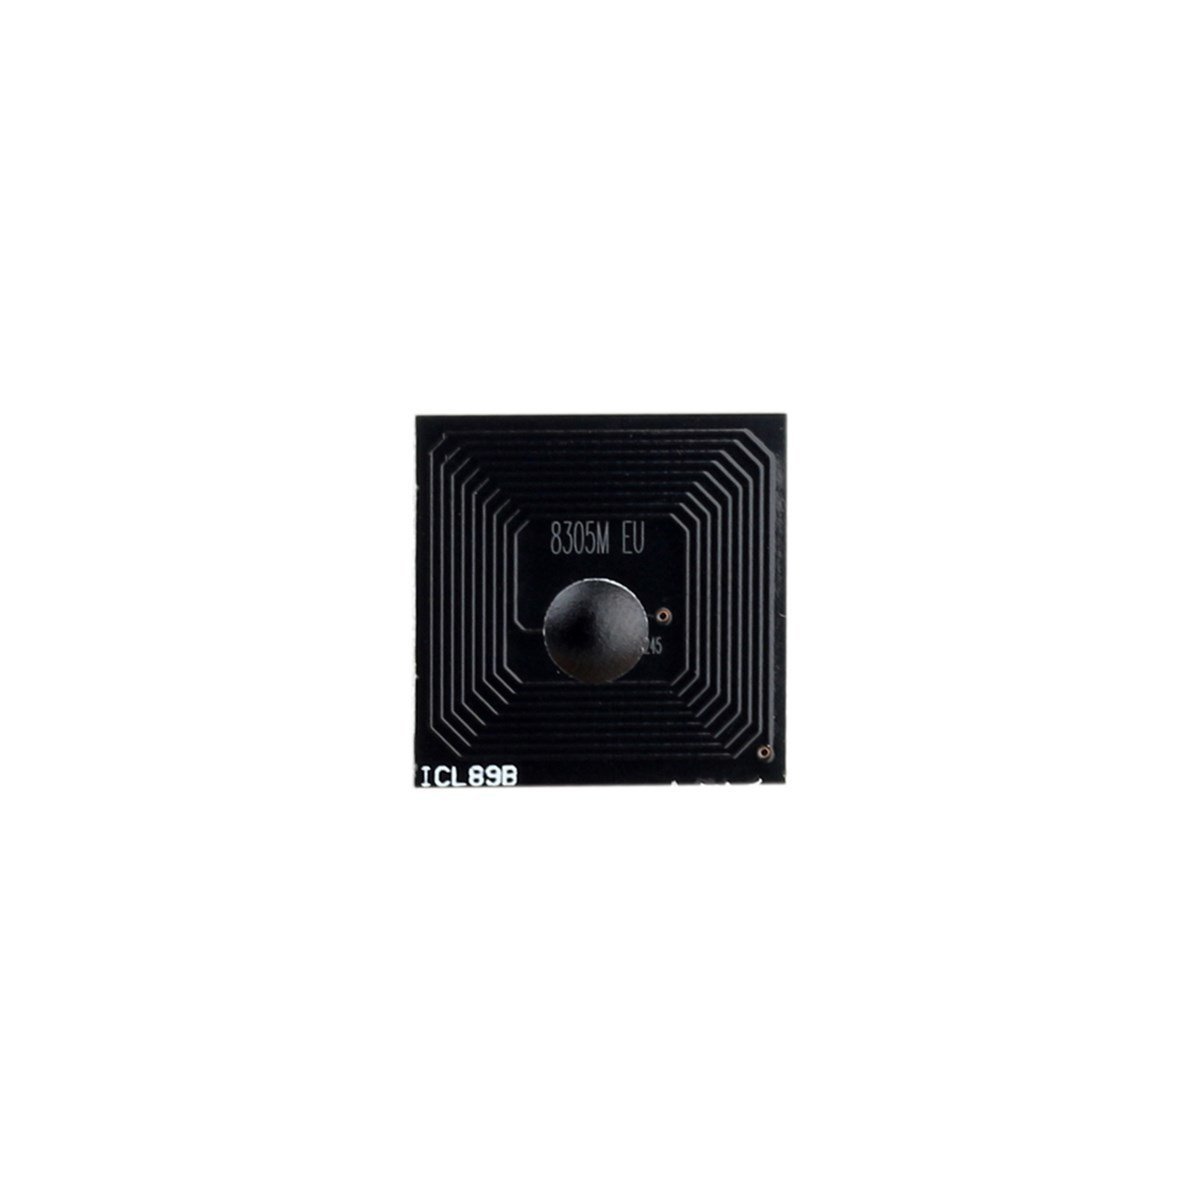 Utax CLP-3721 / PC-2160 Set Toner Çipi